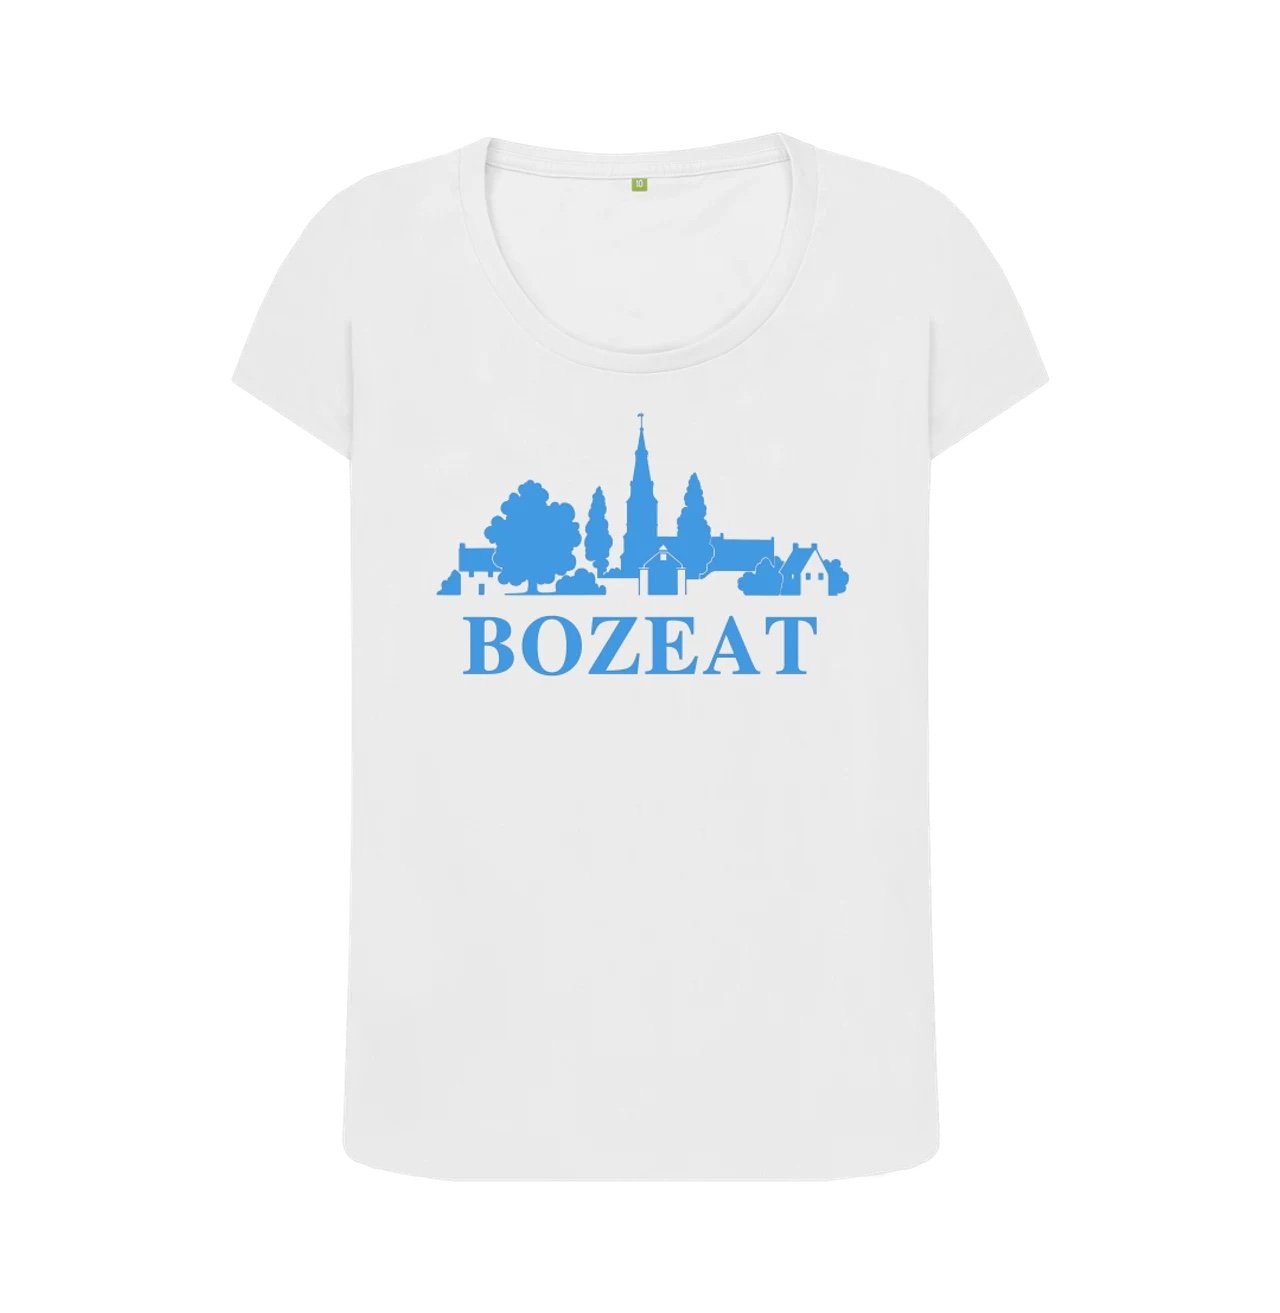 Bozeat Merchandise ladies tshirt.jpg